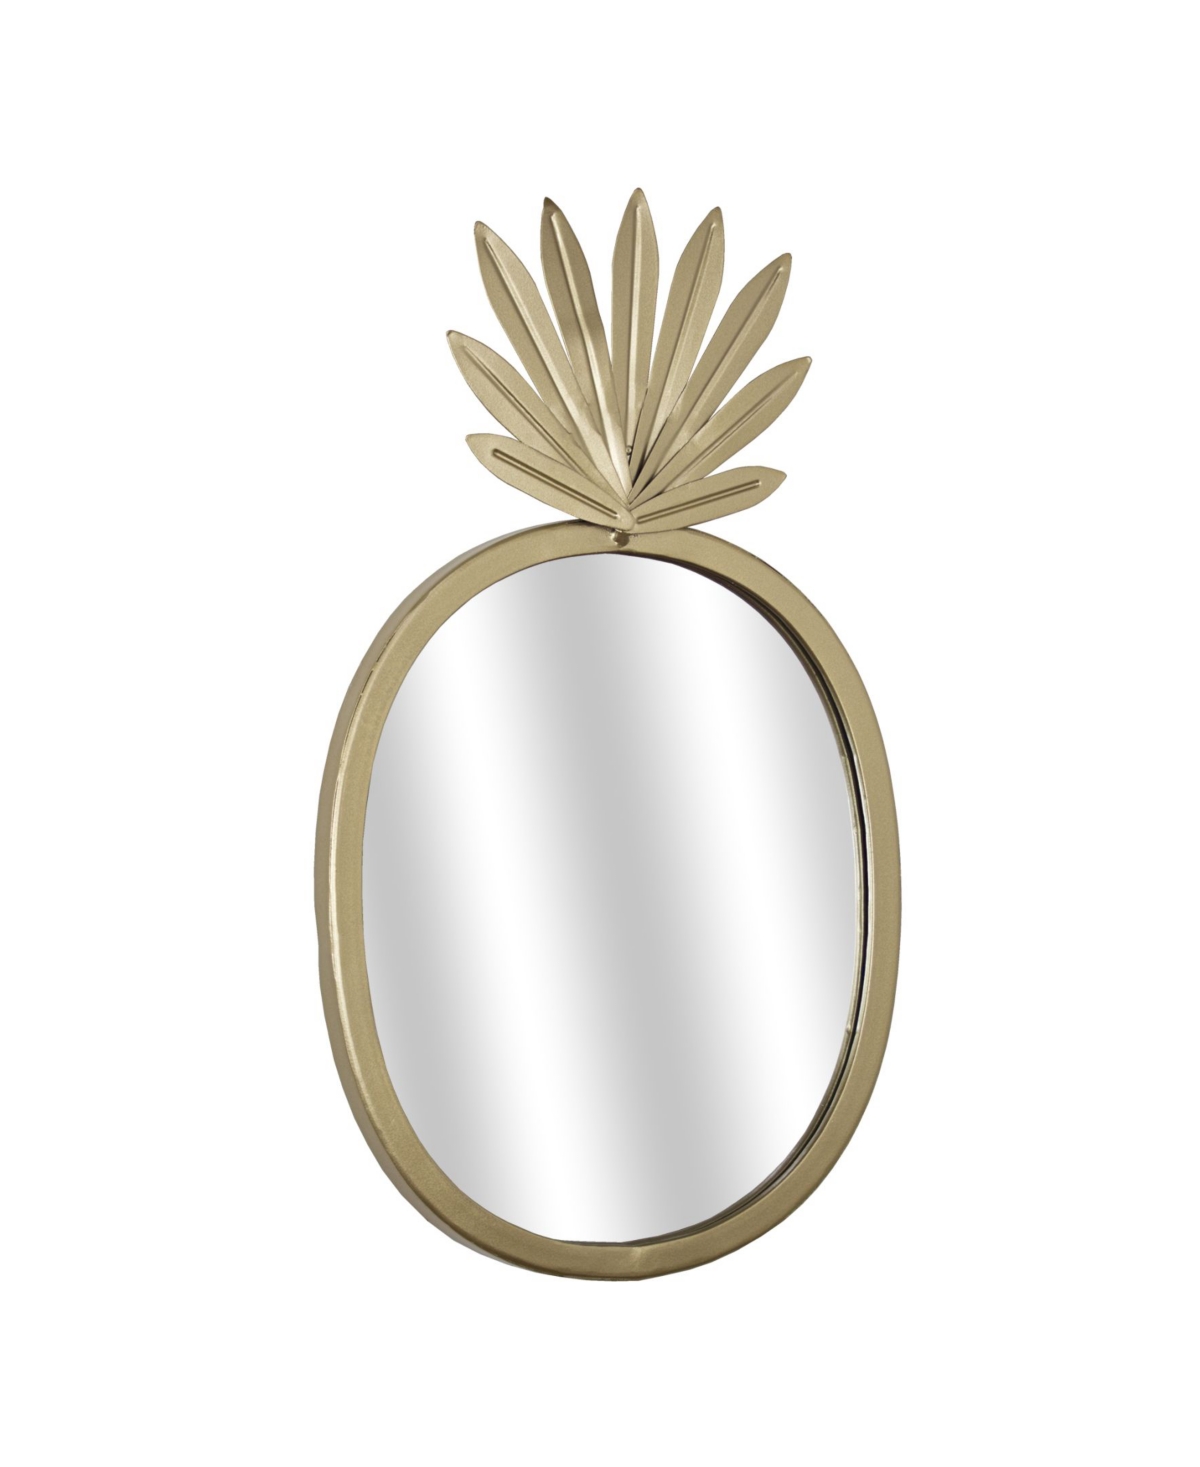 American Art Decor Pineapple Accent Mirror - Gold-Tone